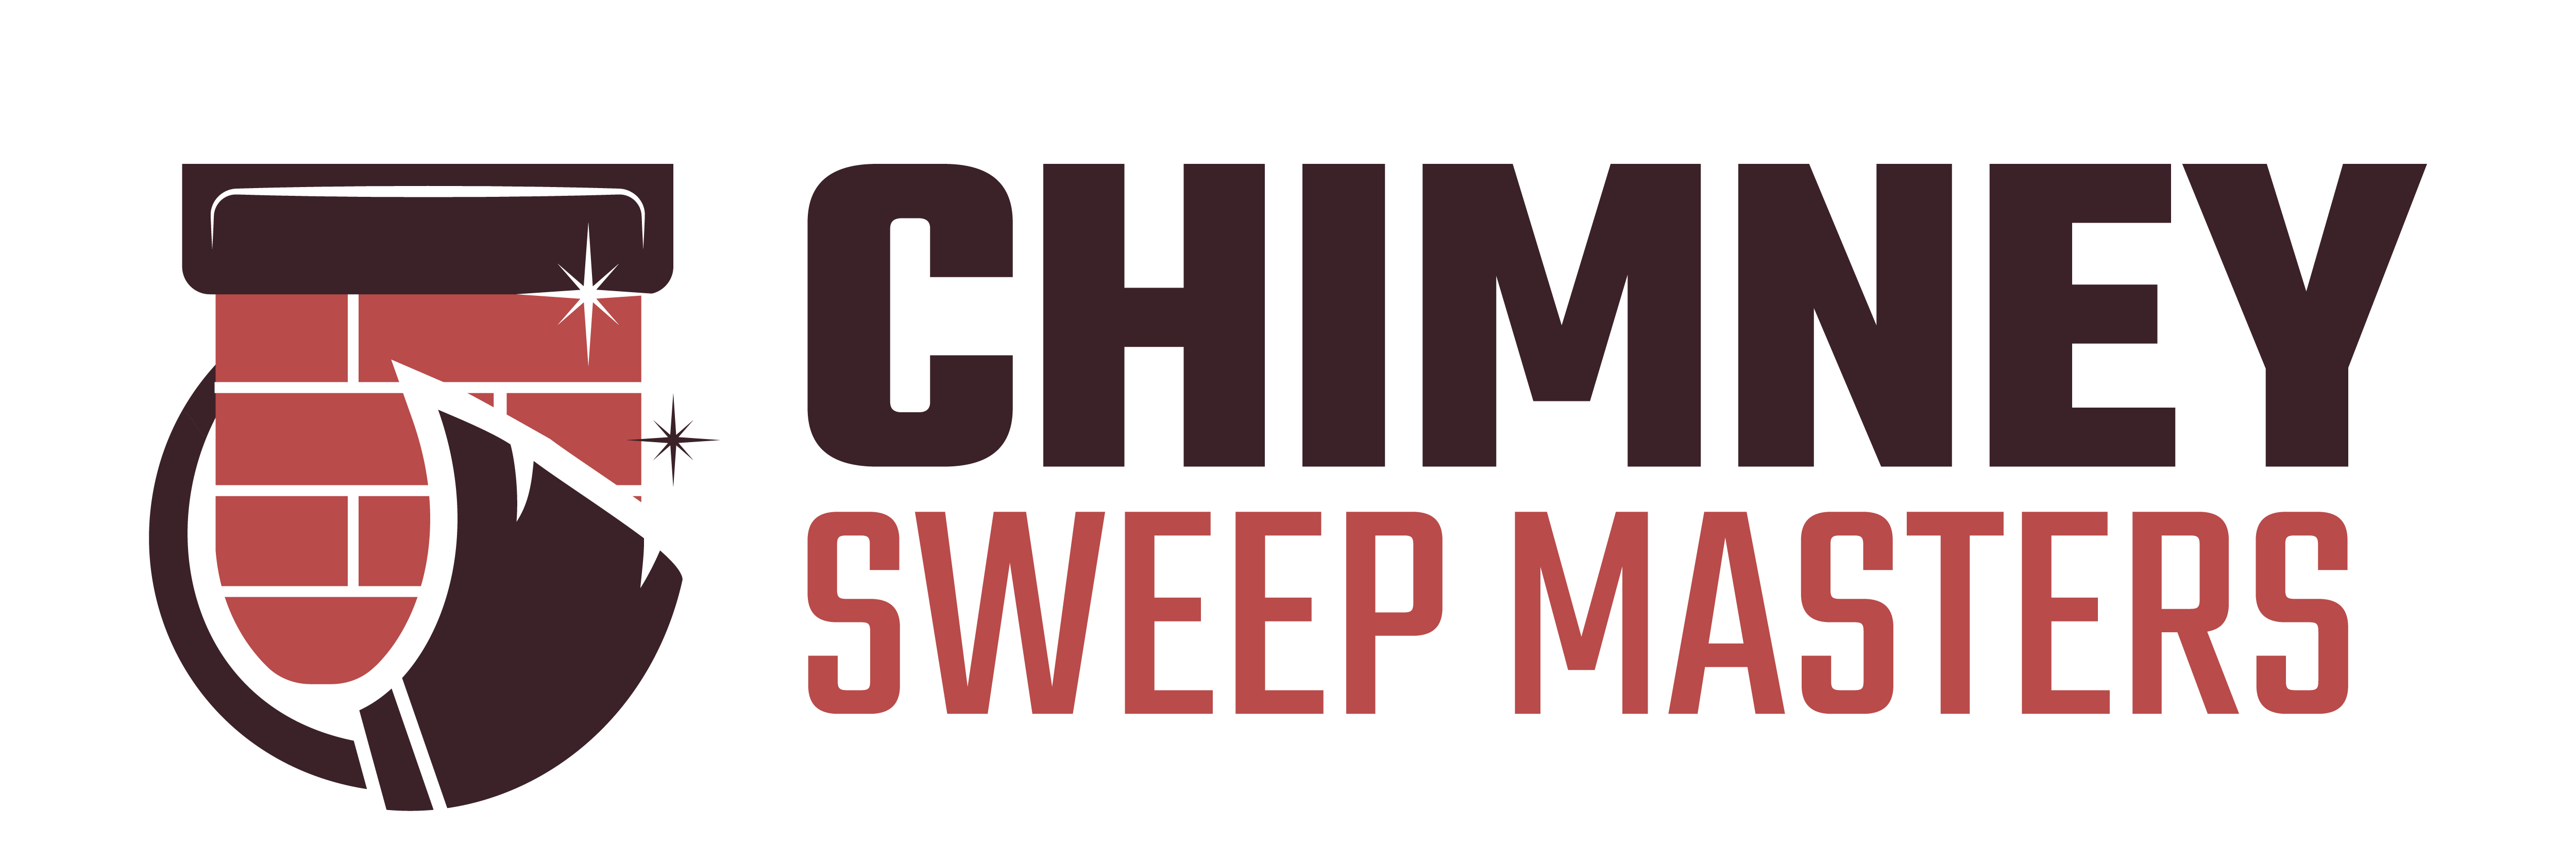 Chimney Sweep Masters Lake of the Woods Logo